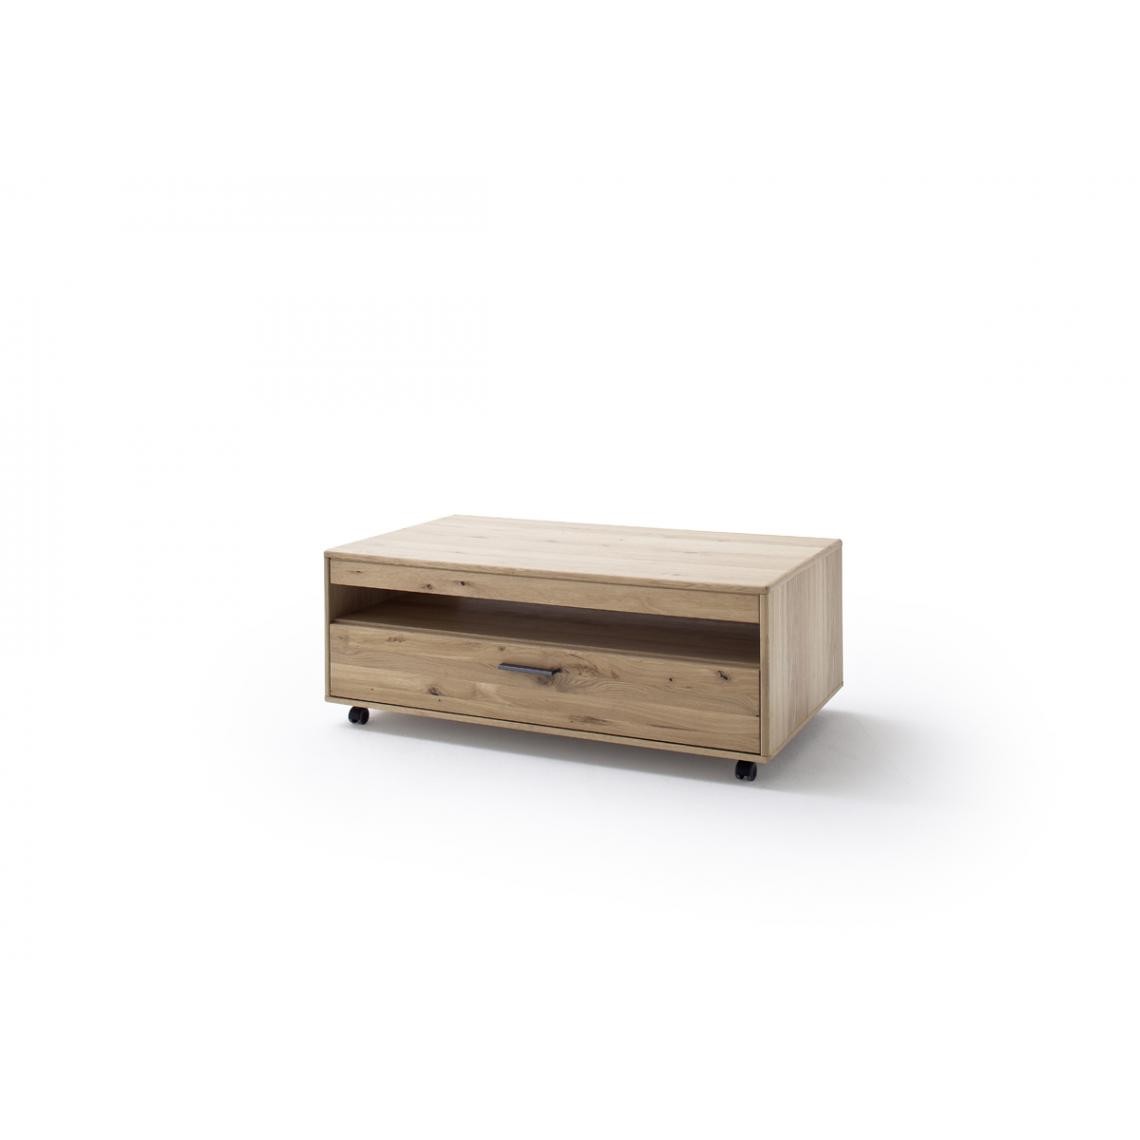 Pegane - Table basse avec tiroir en chêne noueux - L115 x H45 x P65 cm - Tables basses